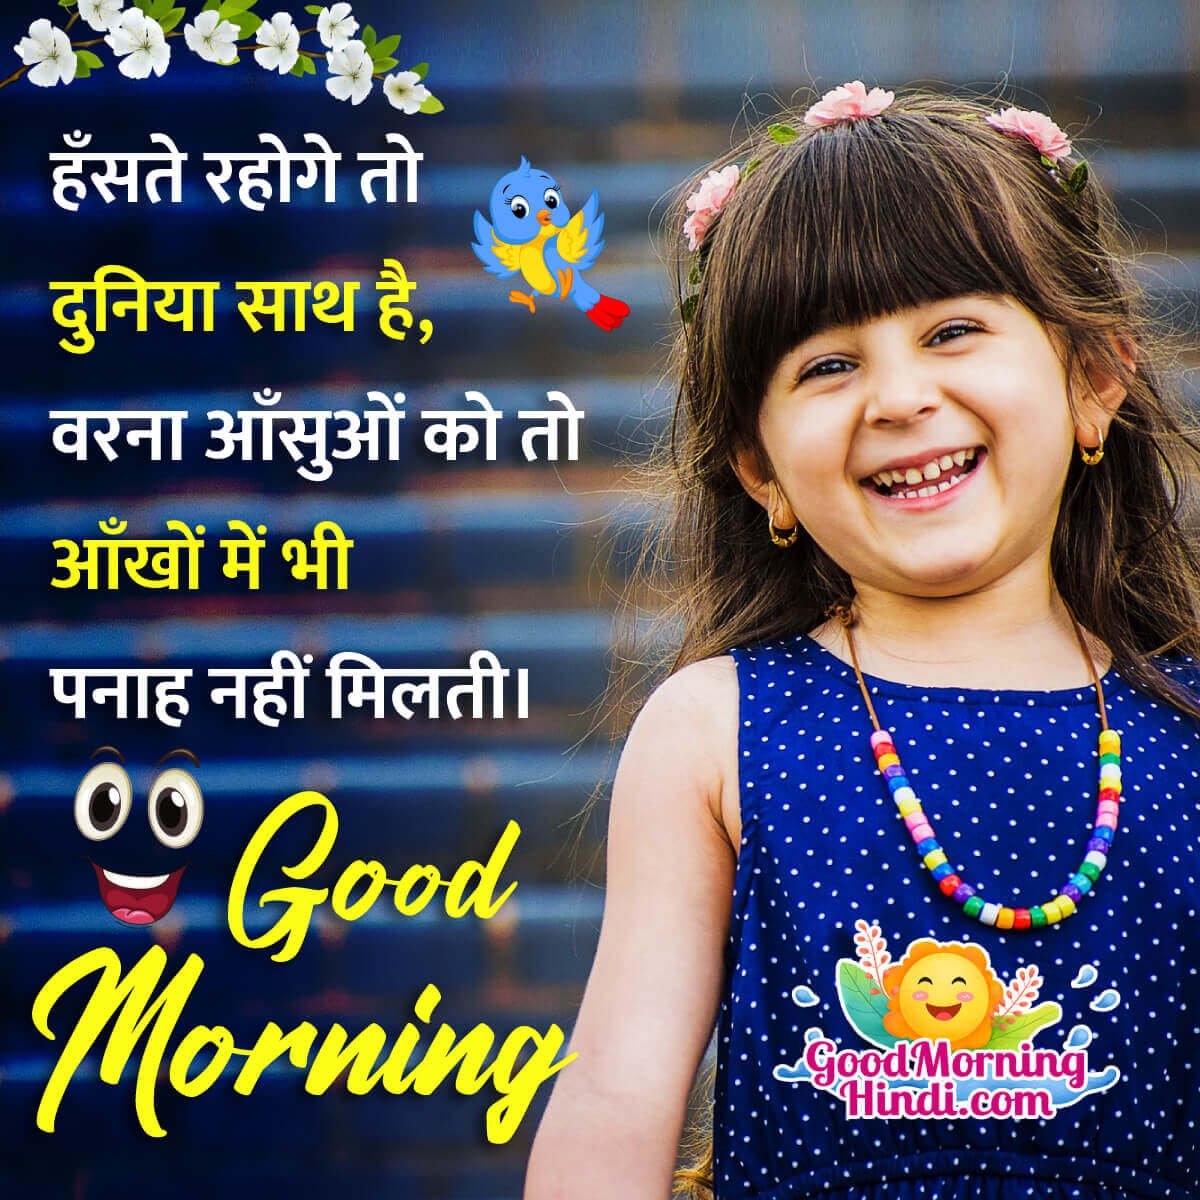 Good Morning Laughing Shayari Pic In Hindi